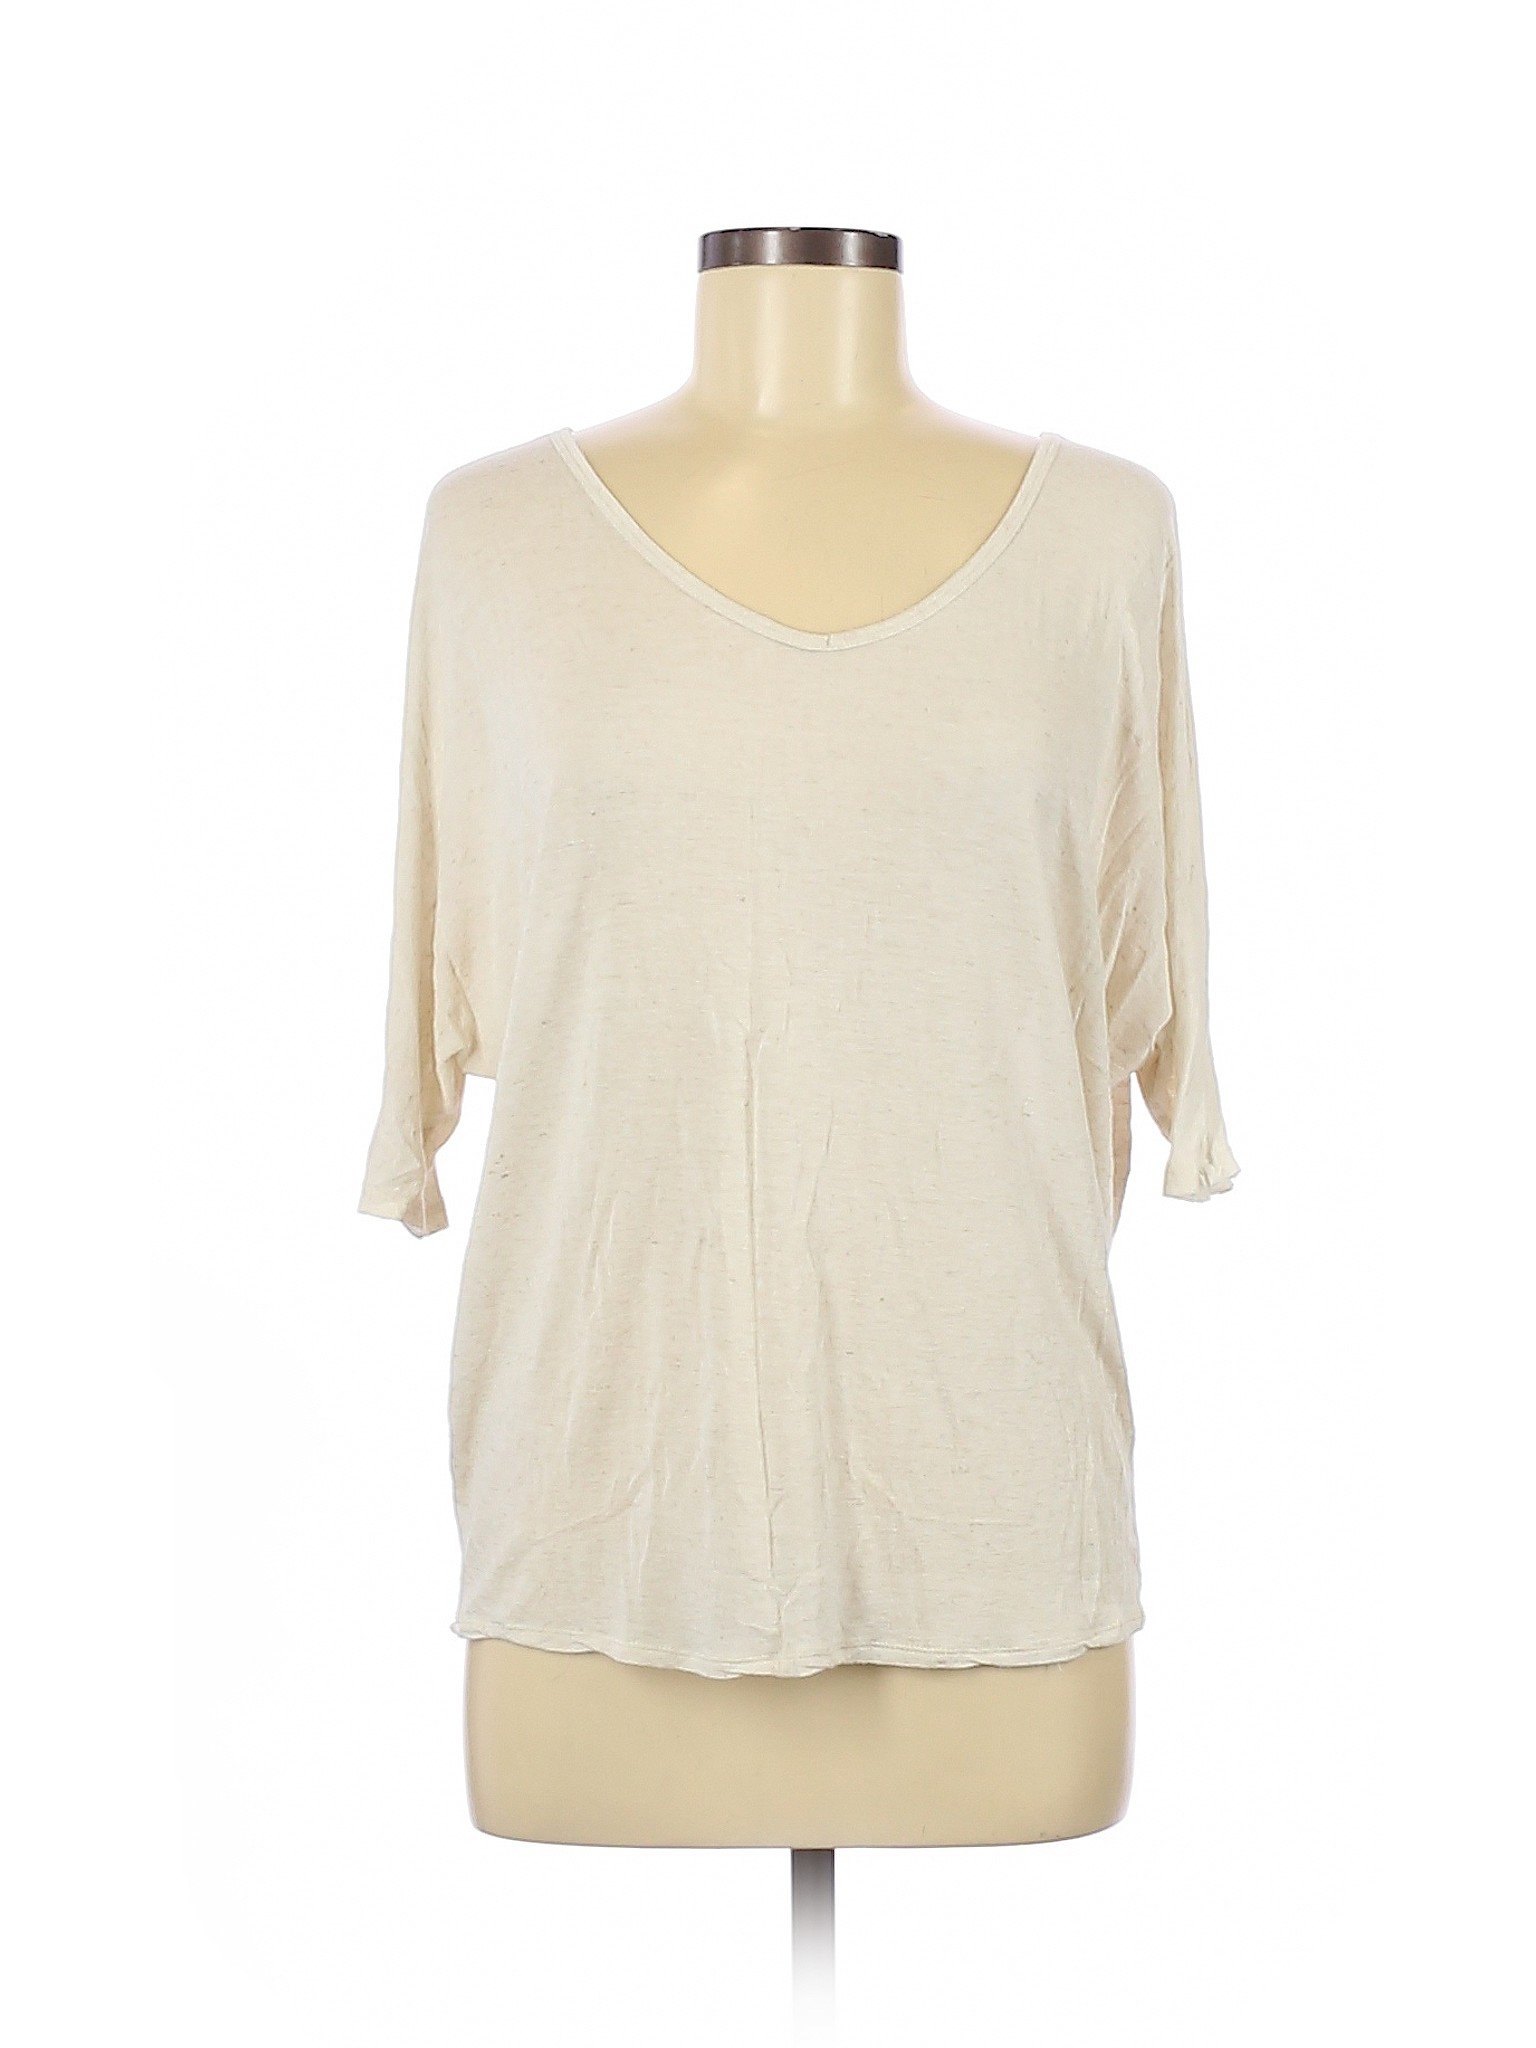 Rue21 Women Ivory 3/4 Sleeve T-Shirt M | eBay